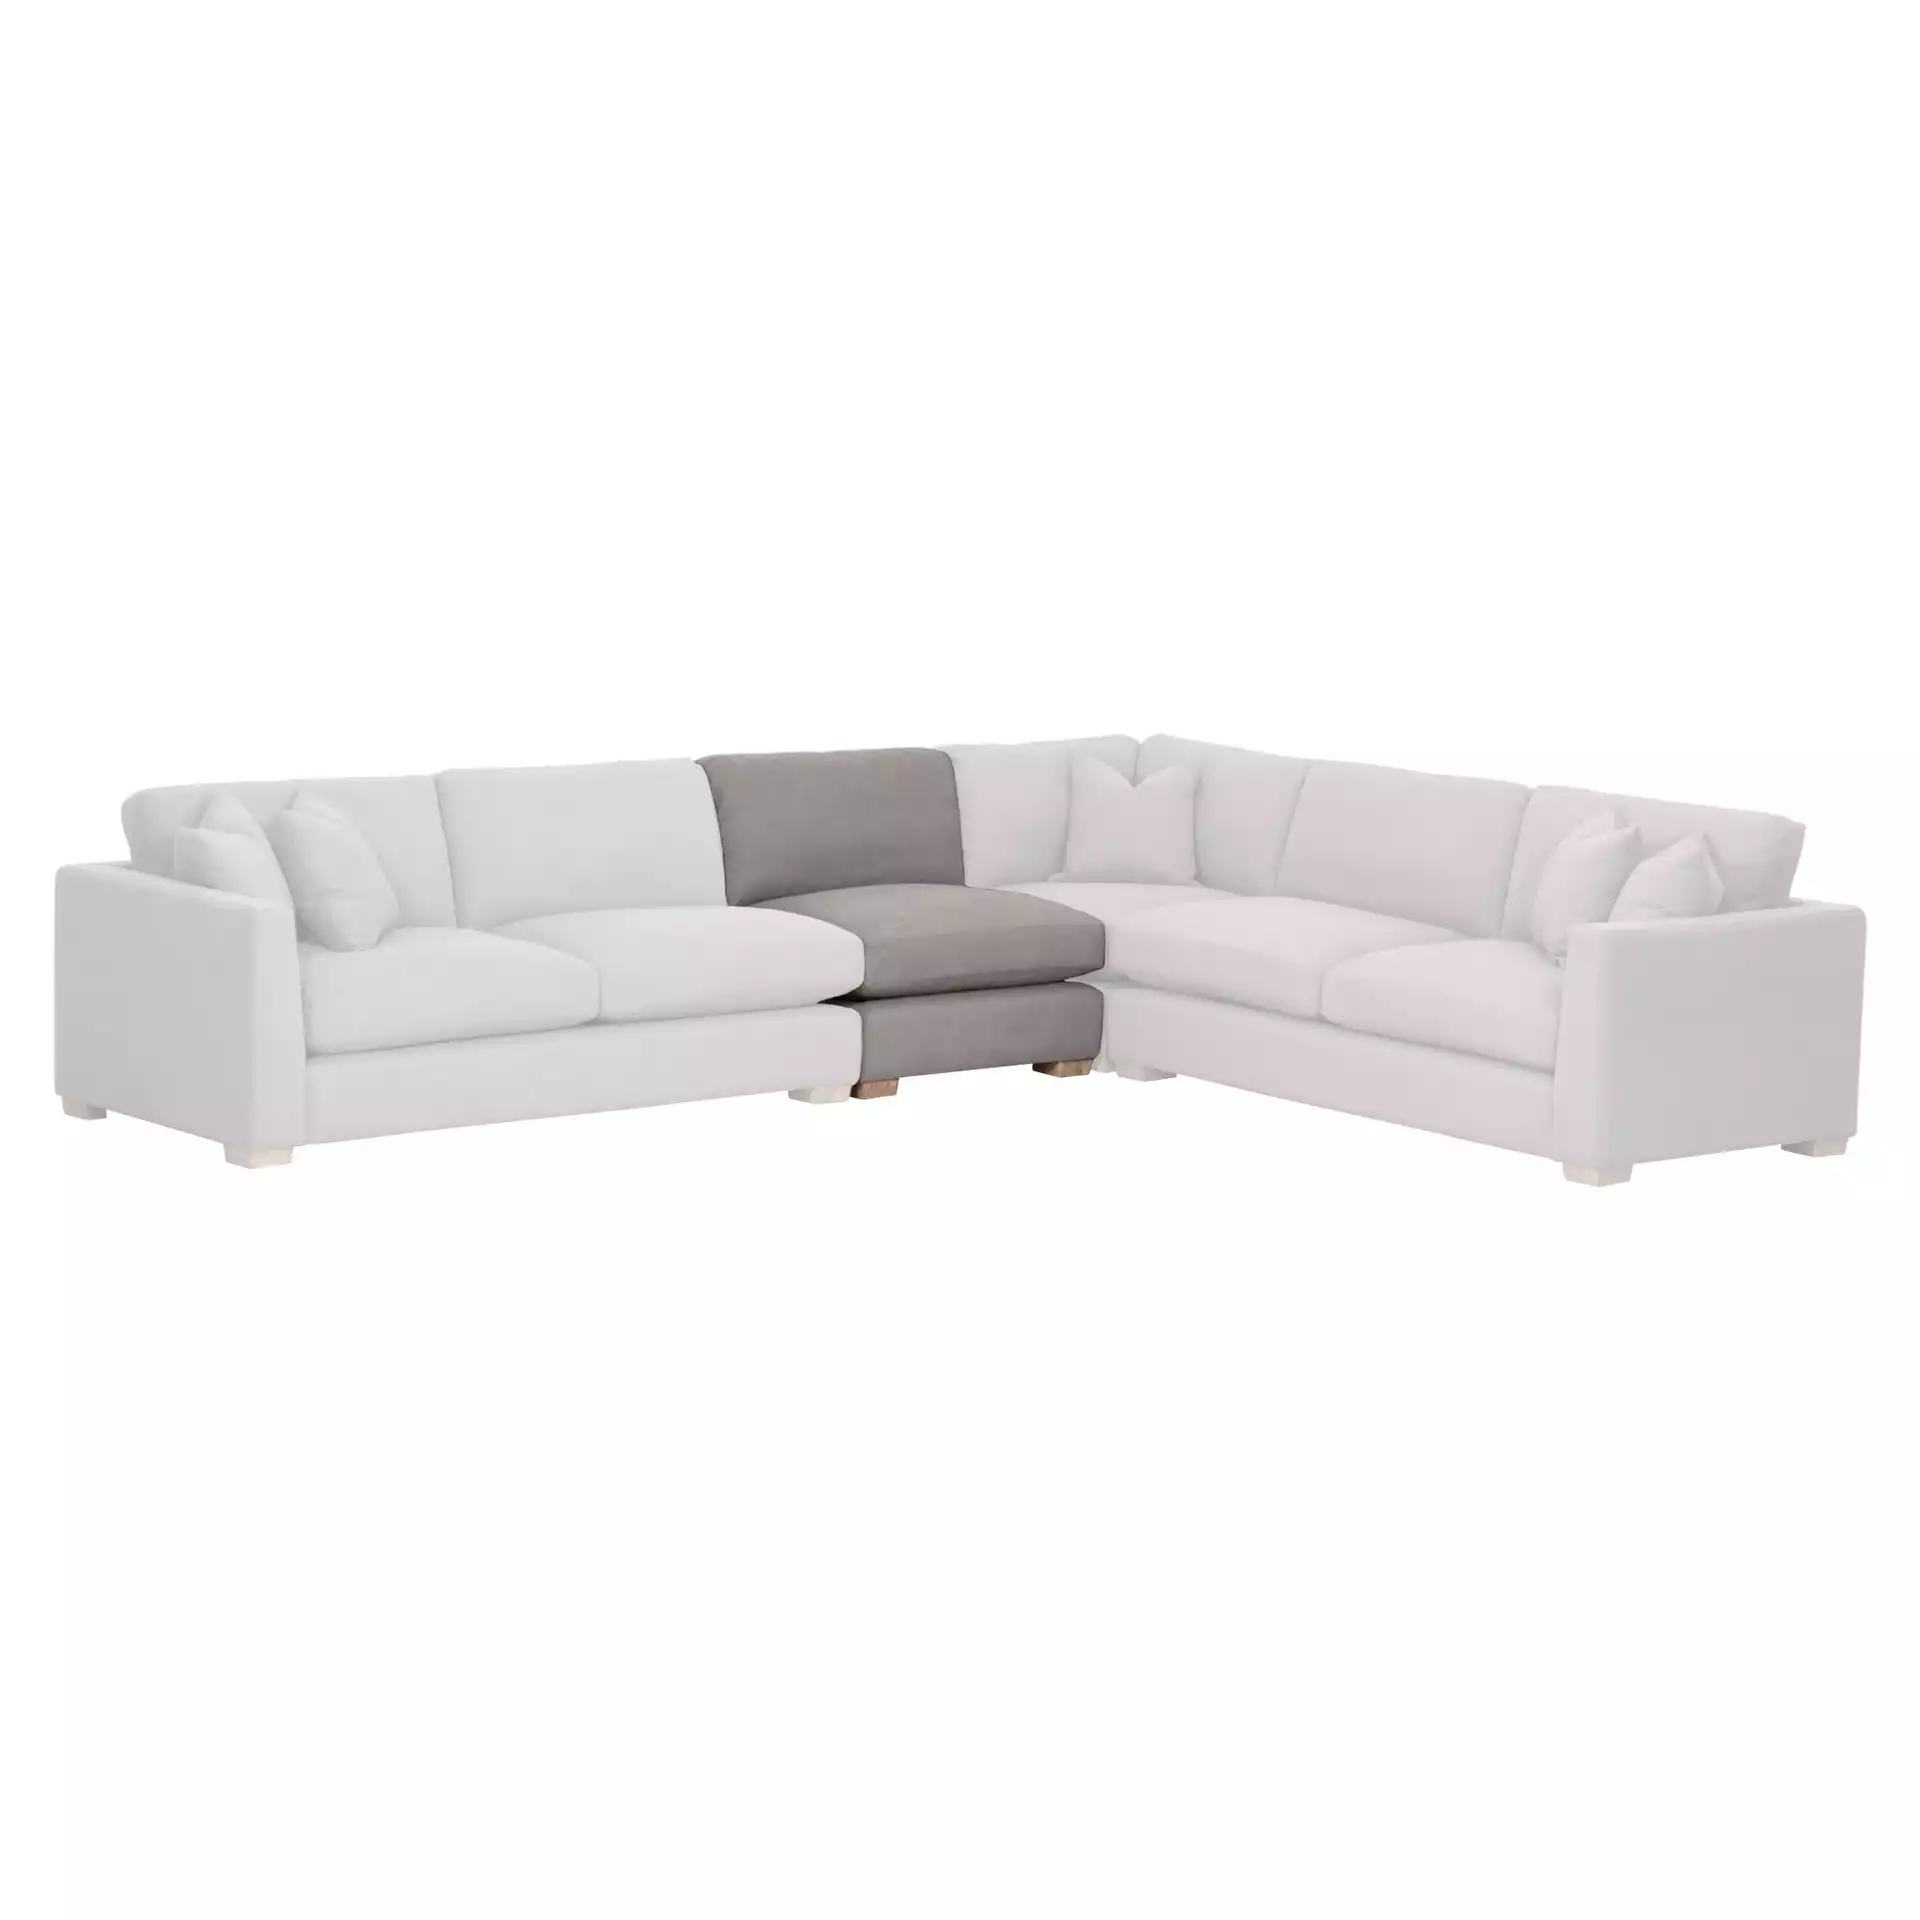 Hayden Modular Taper 1-Seat Armless Sofa Chair, LiveSmart Peyton-Slate, Natural Gray Oak